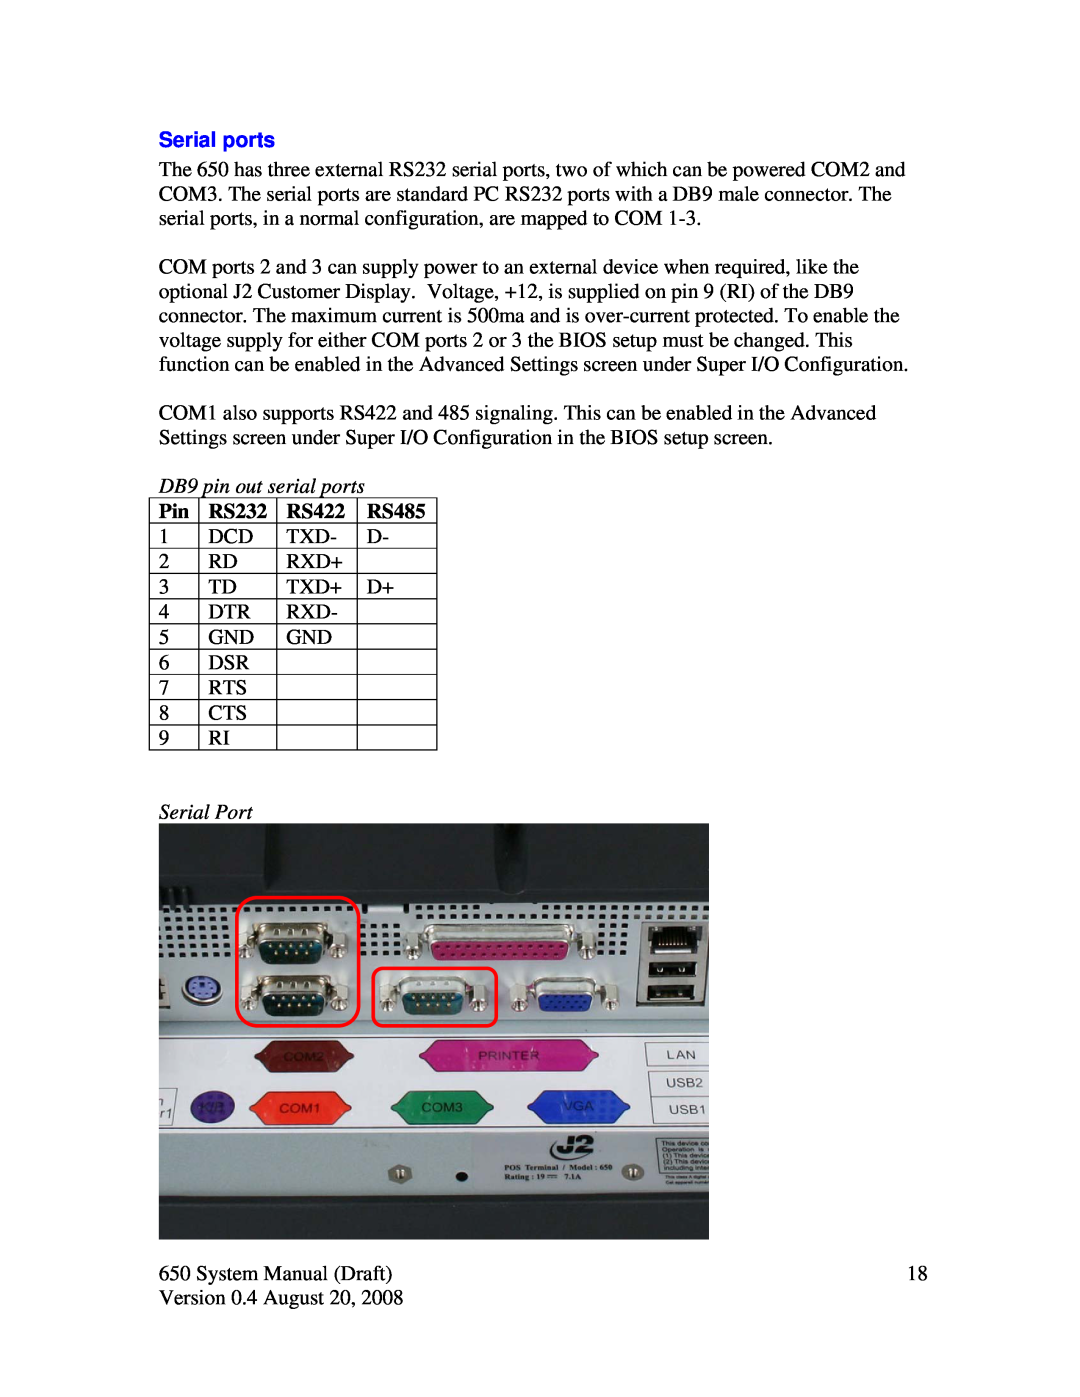 Intel J2 650 system manual Serial ports, DB9 pin out serial ports, Serial Port, RS232, RS422, RS485 